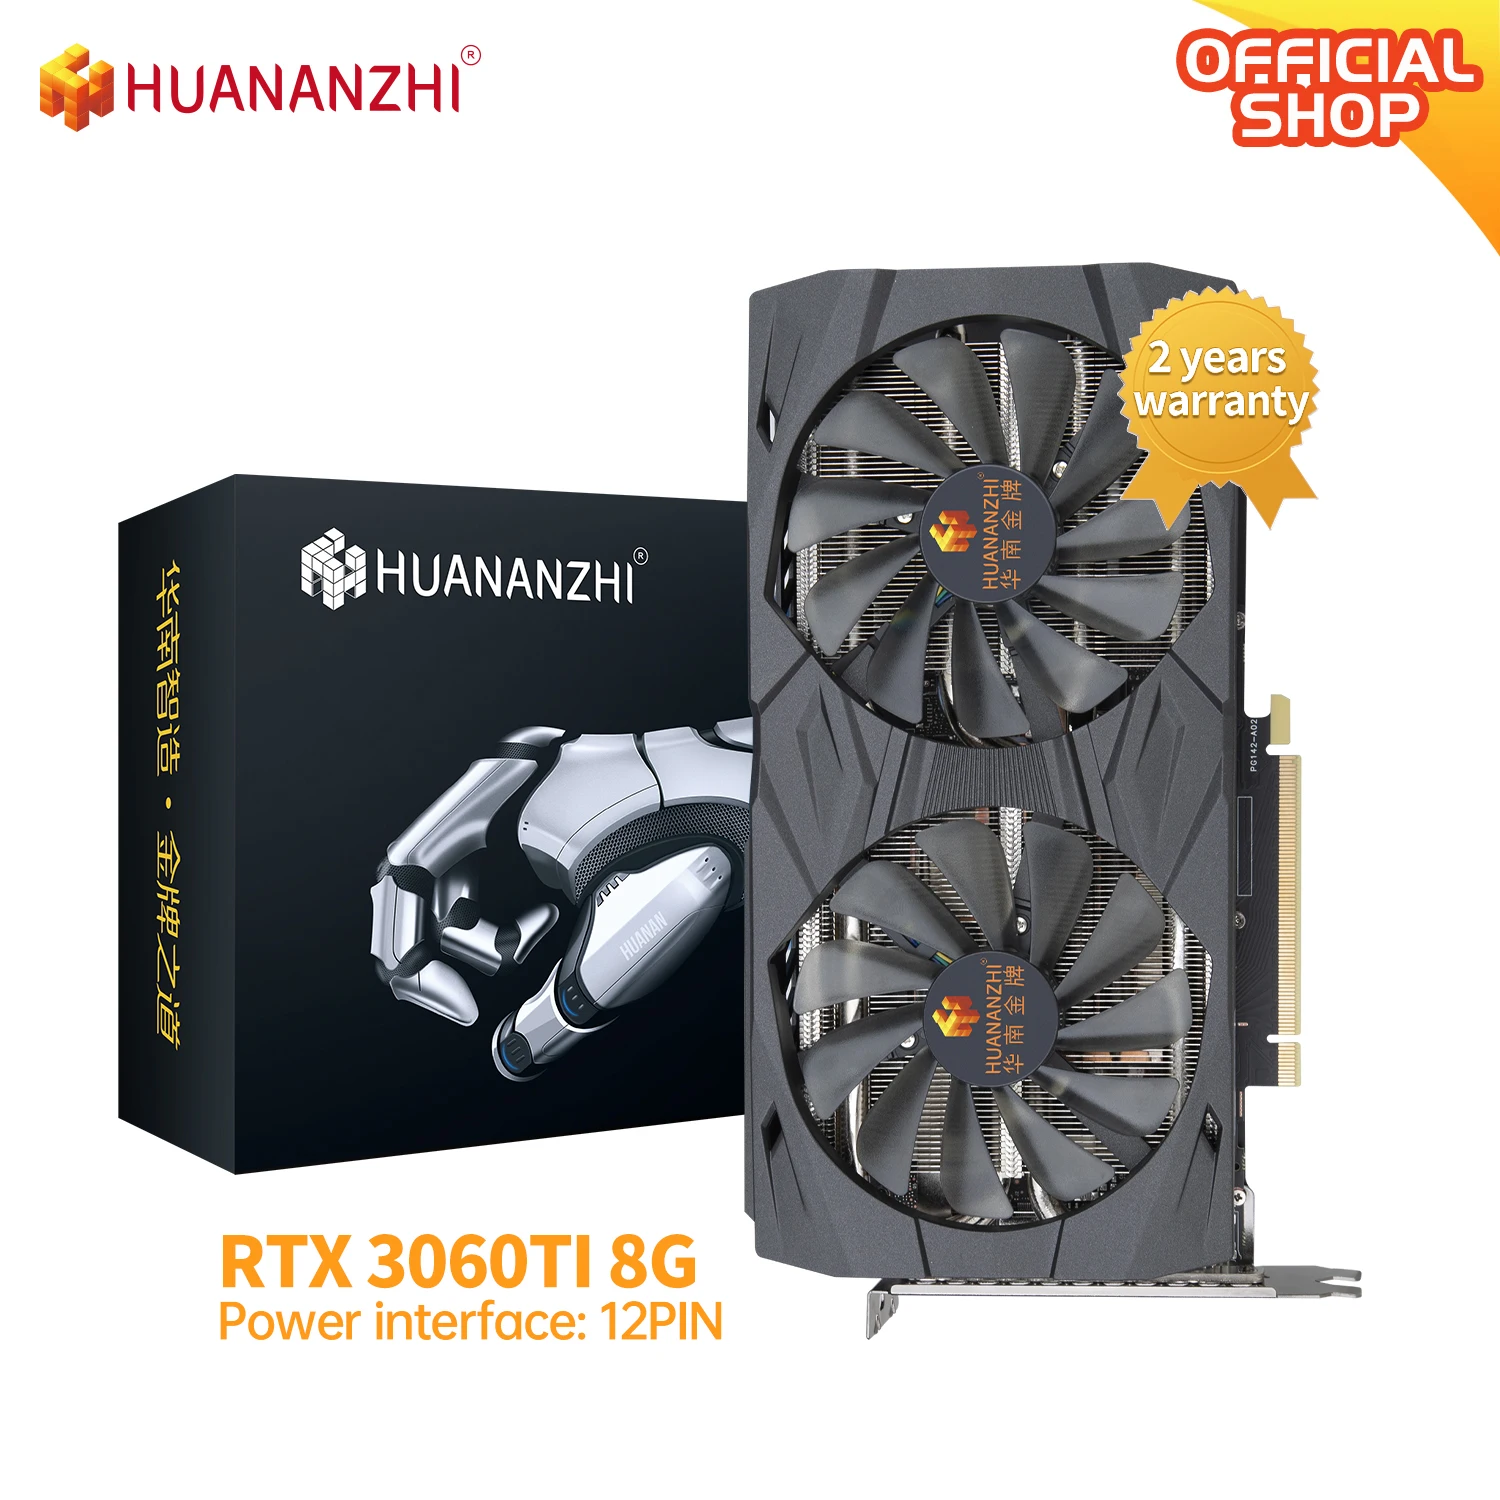 HUANANZHI RTX 3060TI 8G Brand New Original Graphics Cards 256Bit GDDR6 HDMI-Compatible DP 3060 TI 8G GPU Video Card